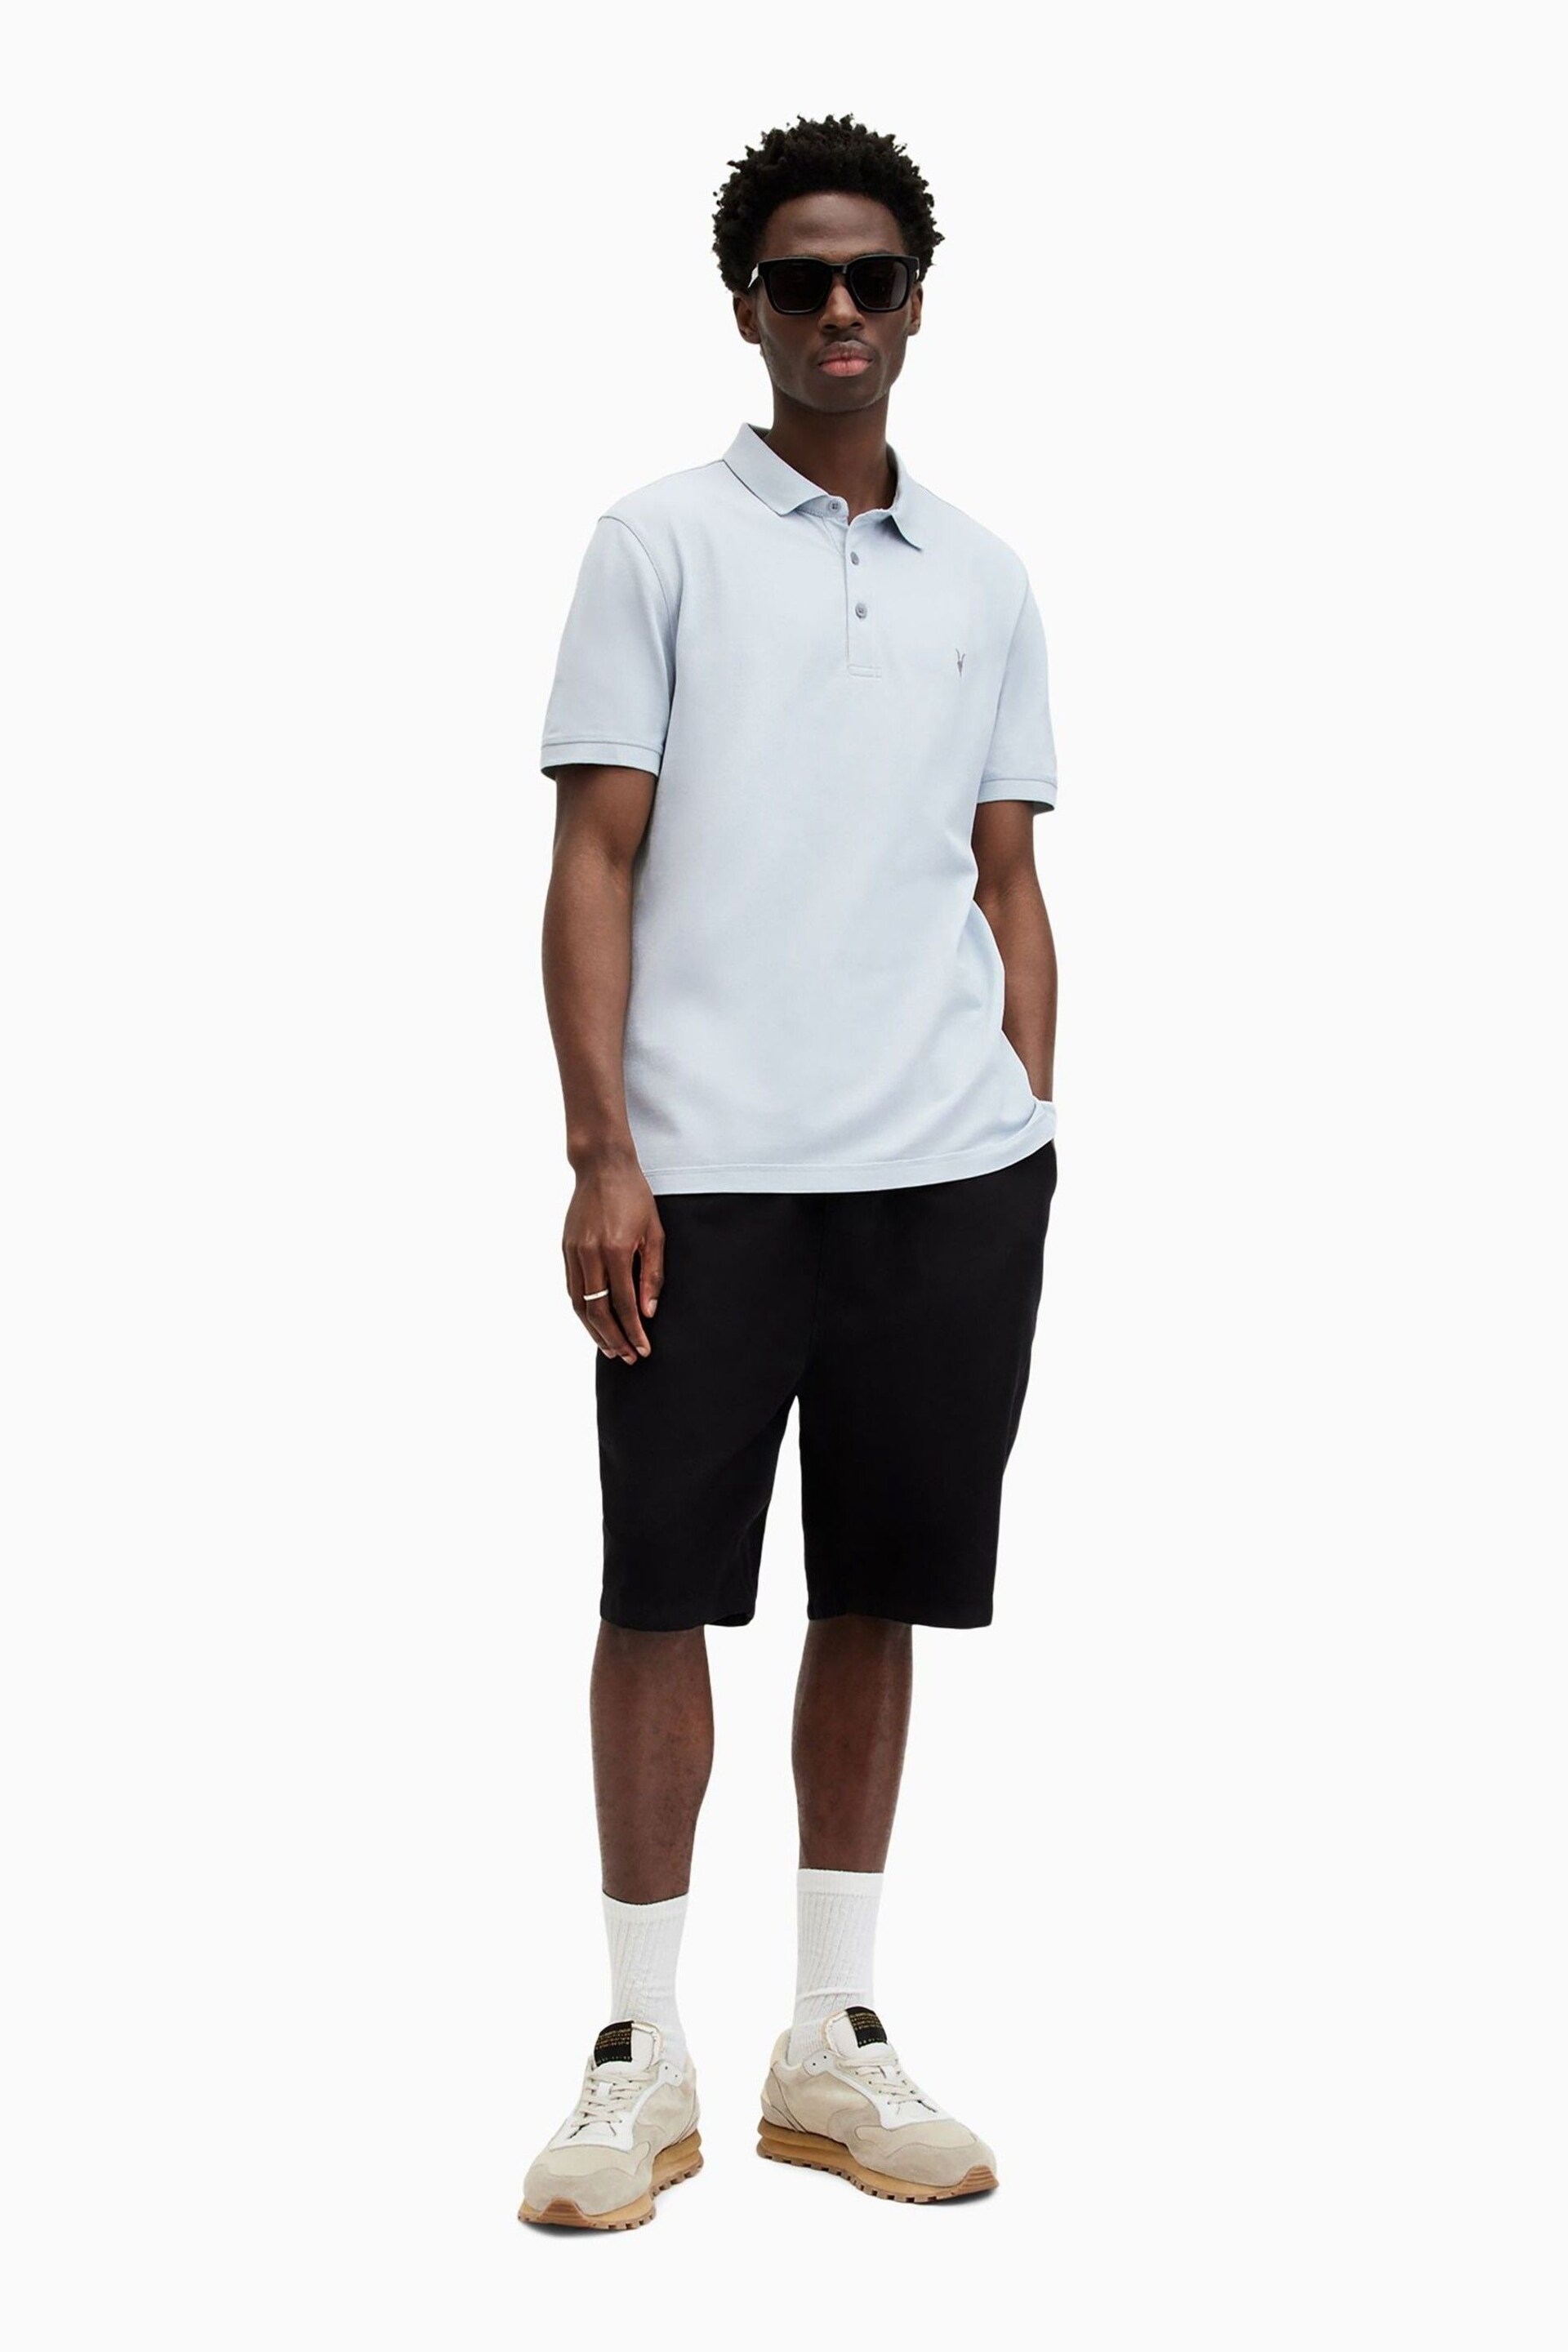 AllSaints Black Reform Short Sleeve Polo Shirt 2 Pack - Image 6 of 7